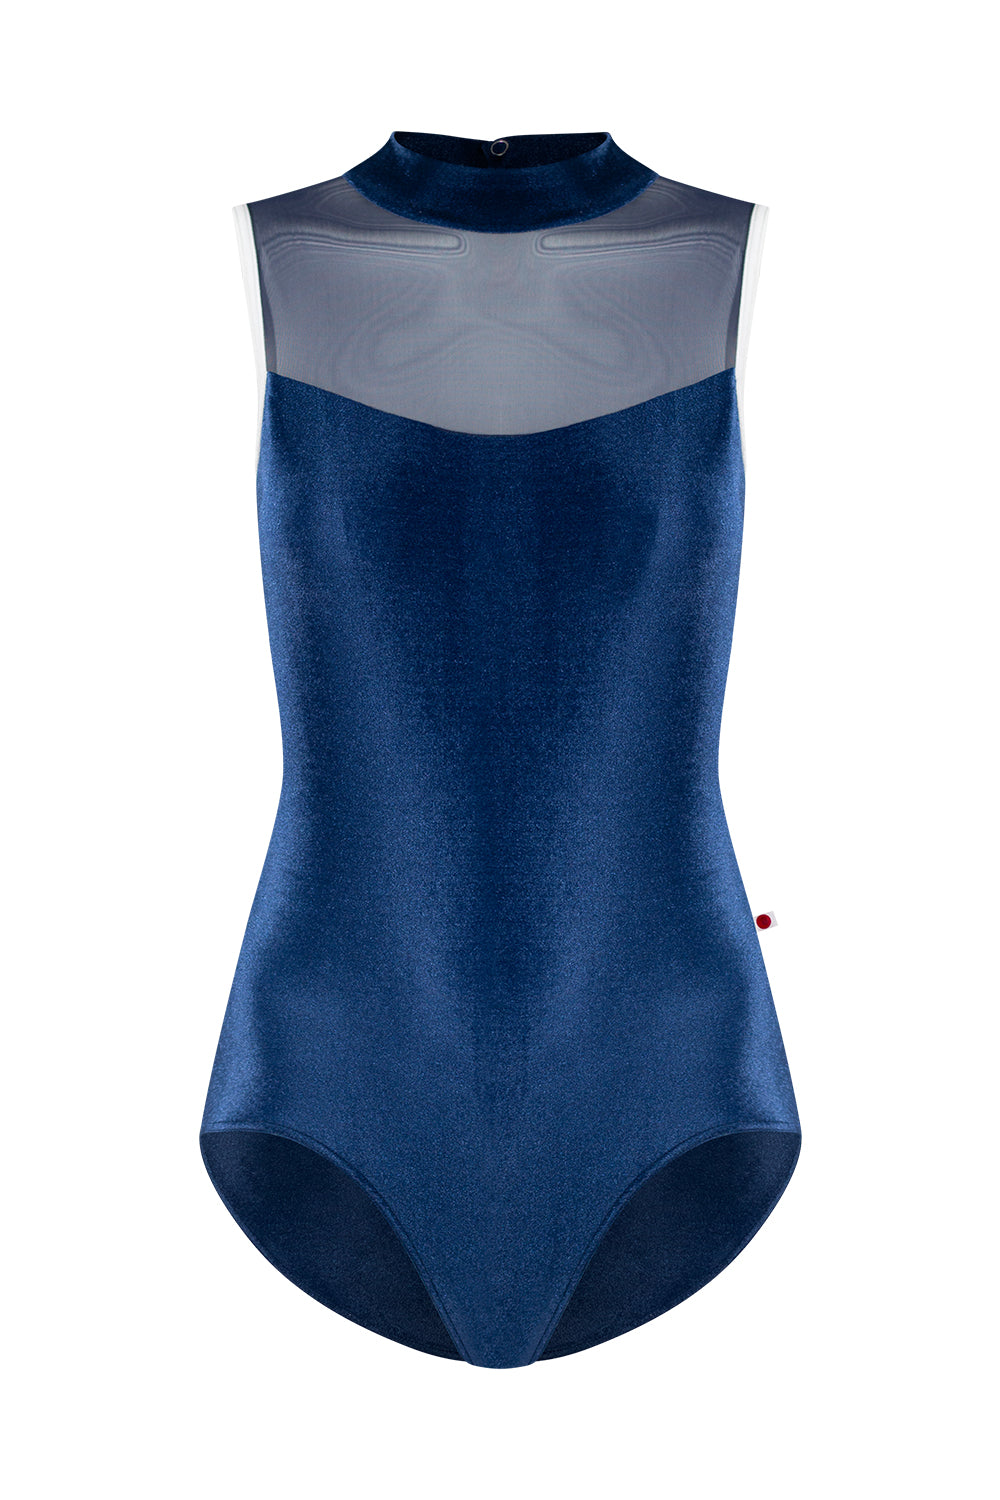 Camila leotard in V-Pisces body color with Mesh Dark Blue top color and V-White trim color